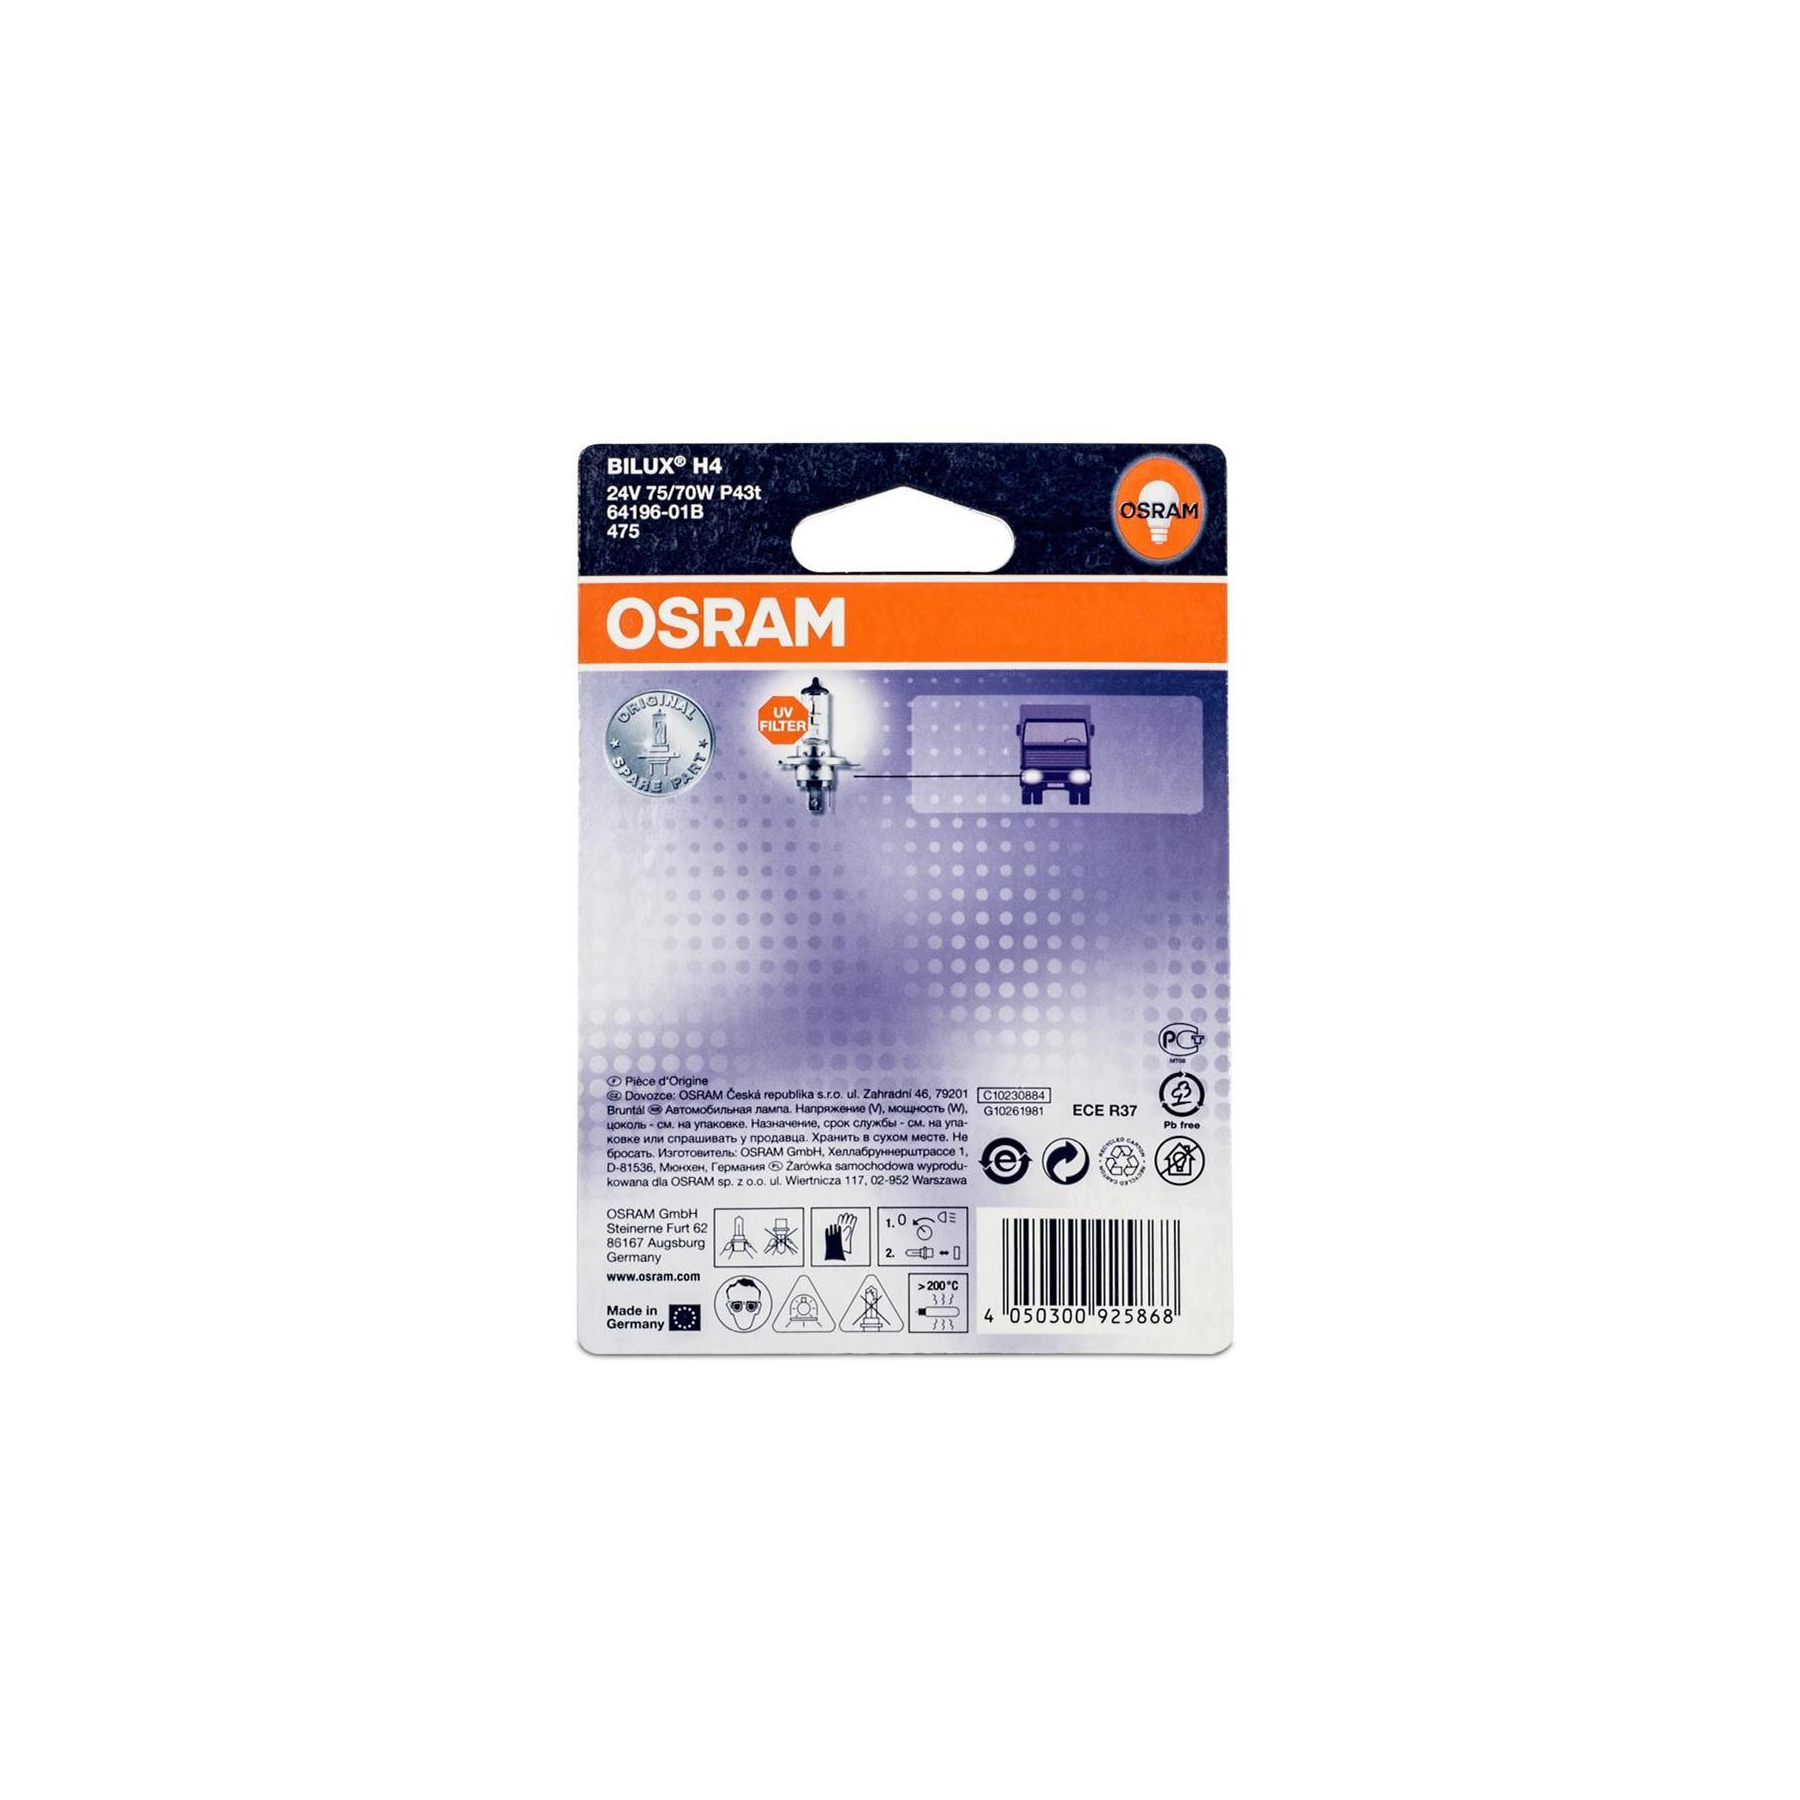 Osram H4 24V Original Line H4 truck headlight bulbs, 8,43 €